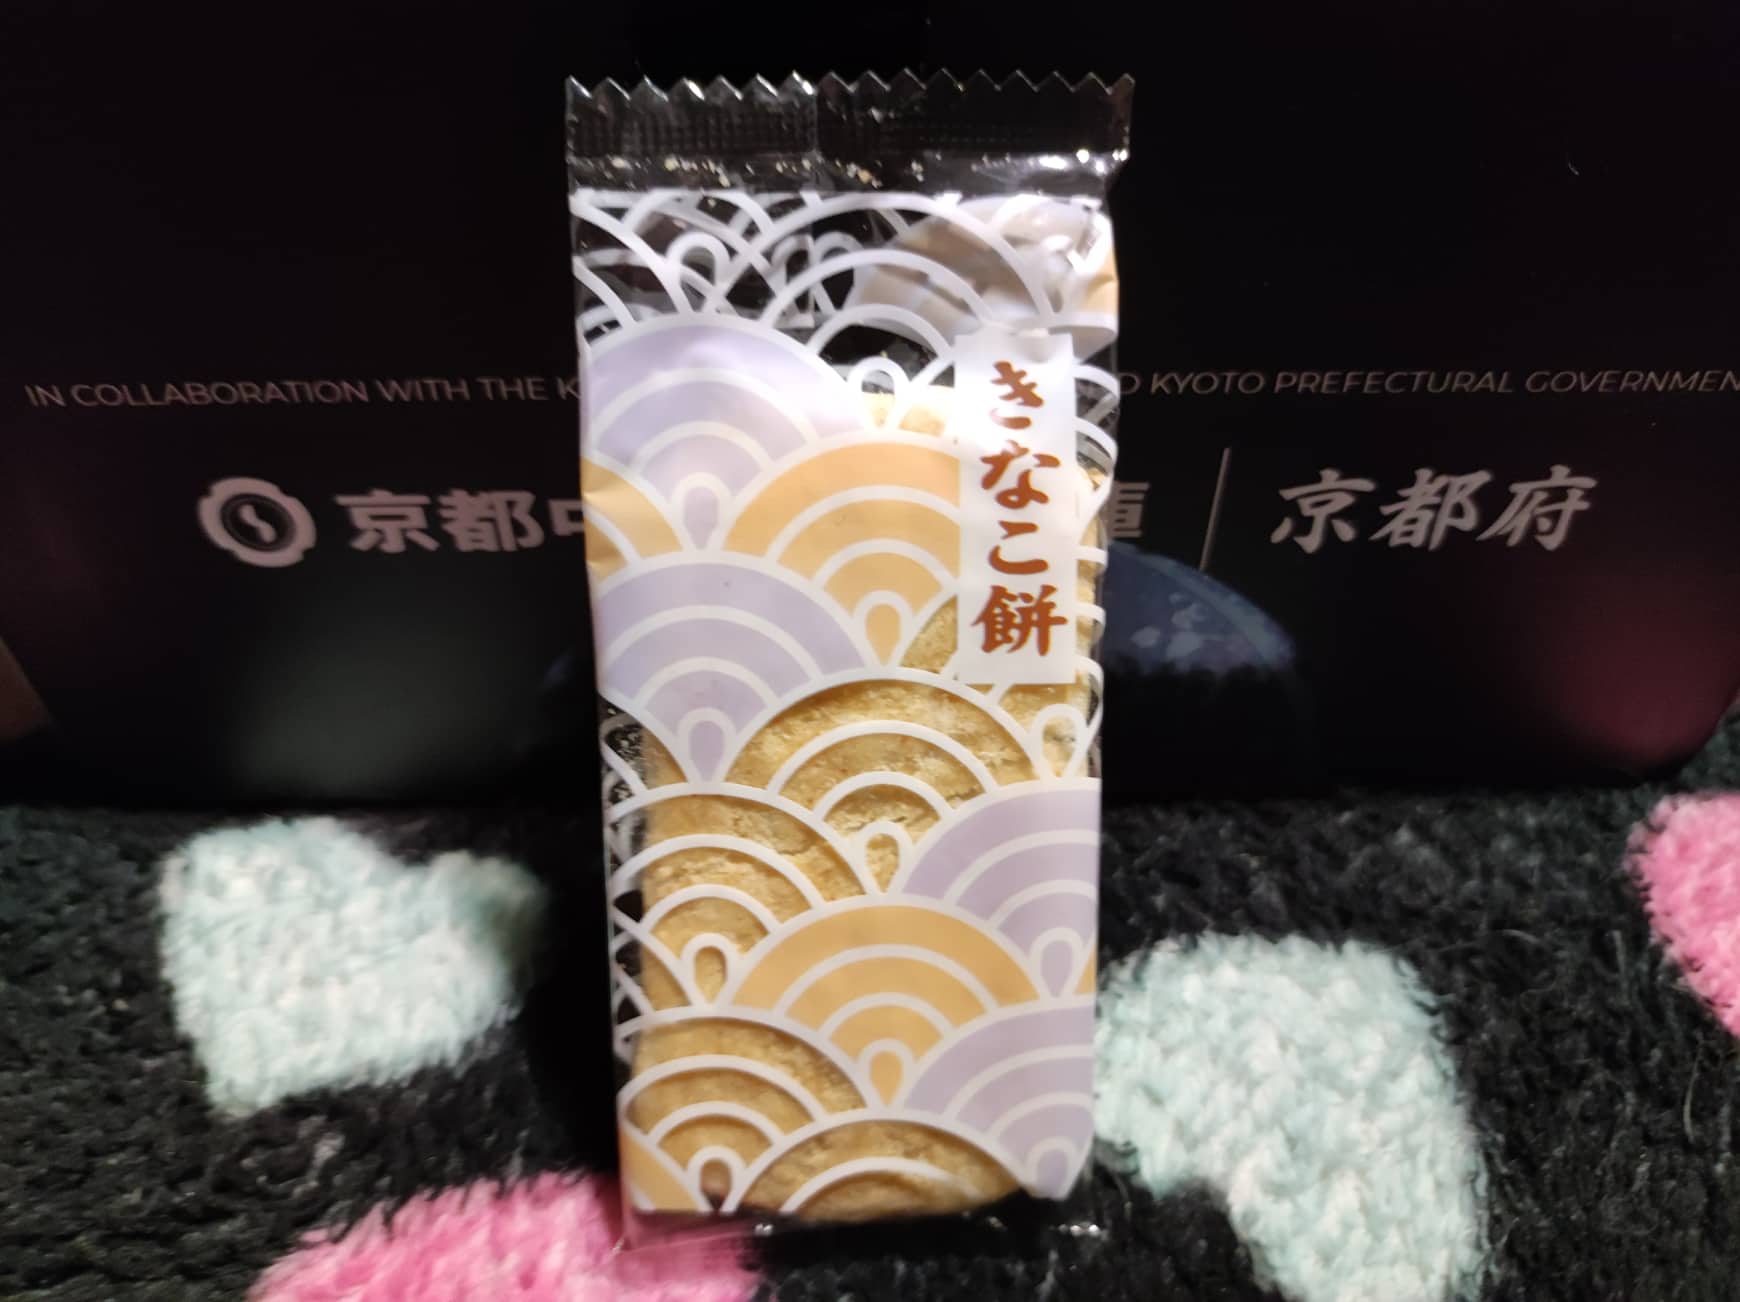 Sakuraco - Kyoto Moon Festival - September Box Edition